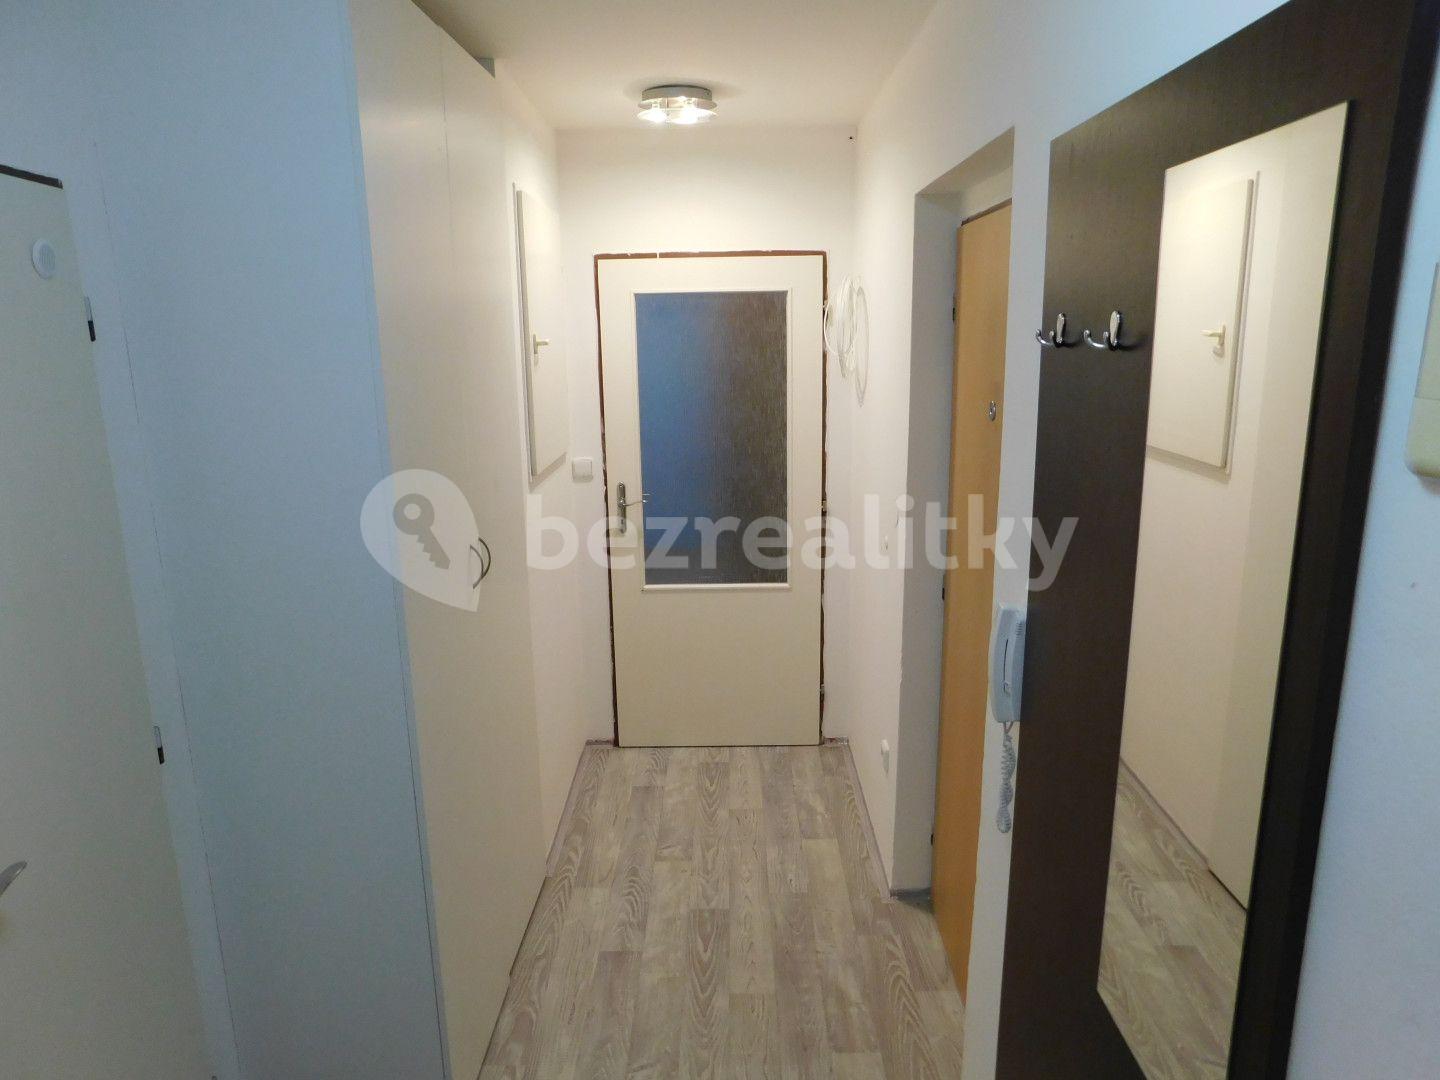 1 bedroom with open-plan kitchen flat for sale, 44 m², Brandlova, Hodonín, Jihomoravský Region